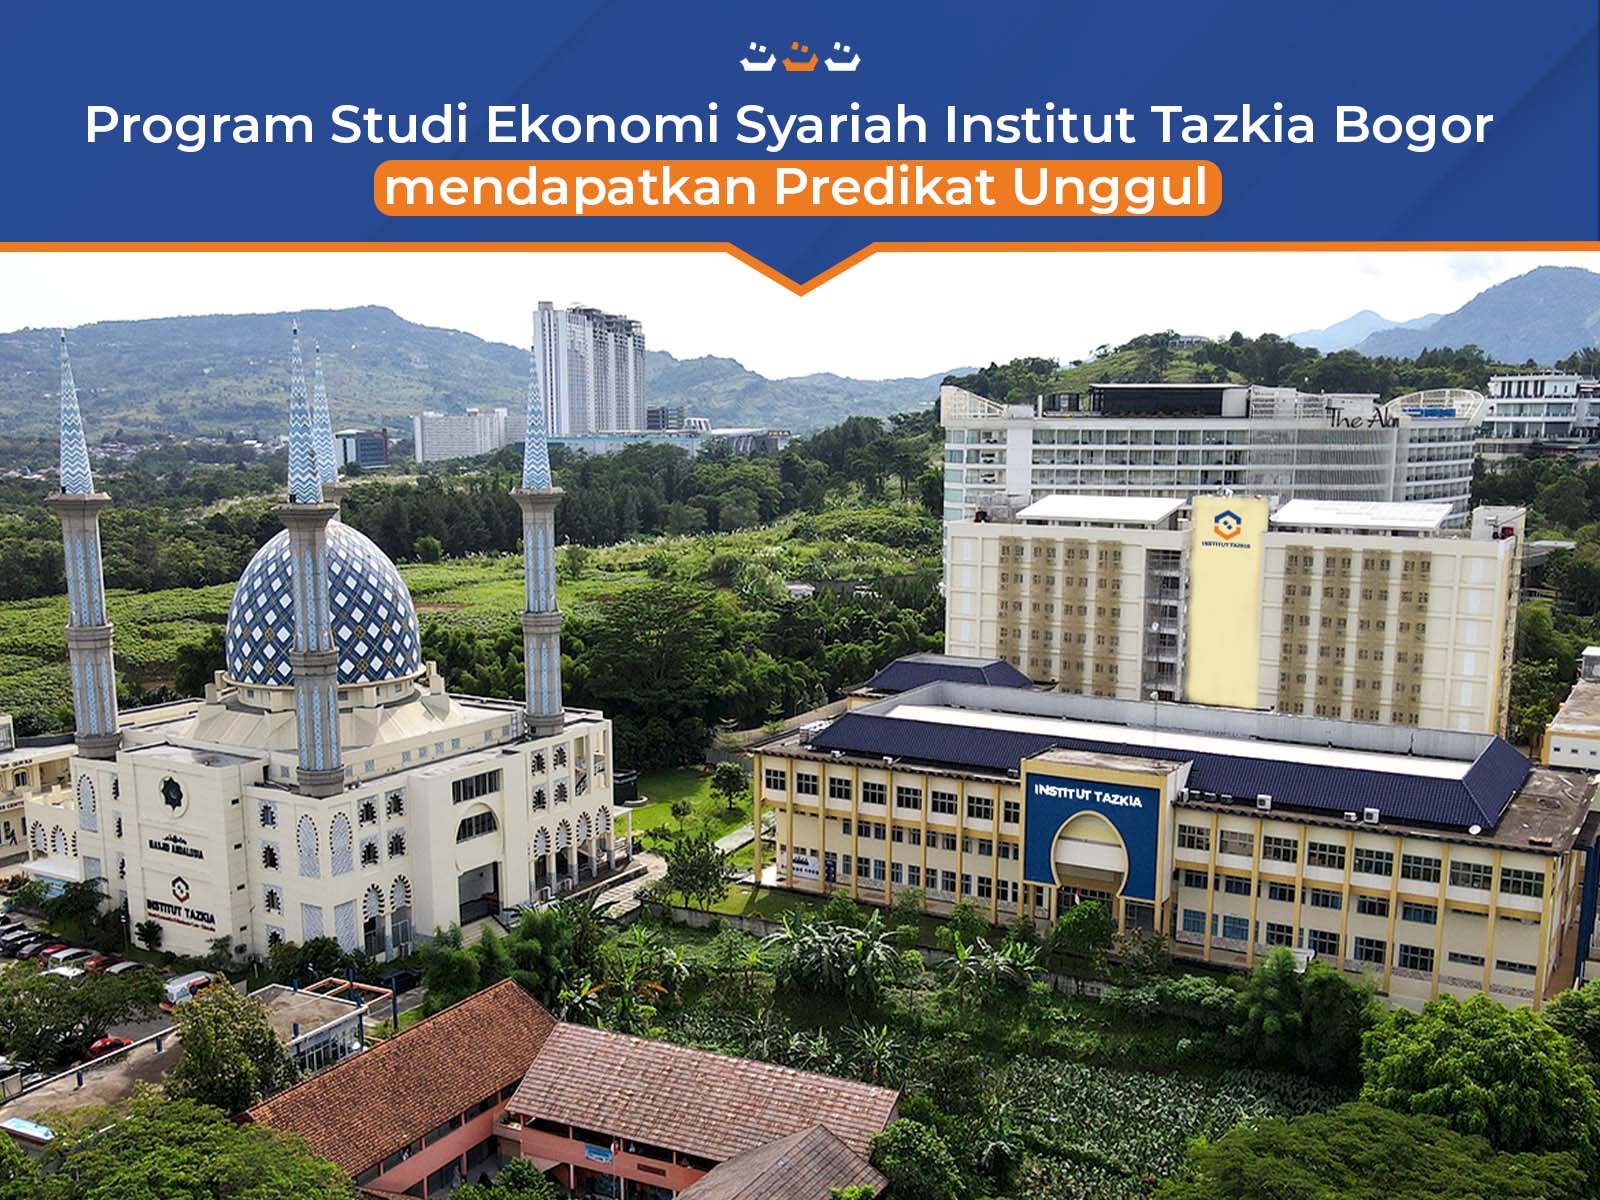 Program Studi Ekonomi Syariah Institut Tazkia Bogor mendapatkan Predikat Unggul